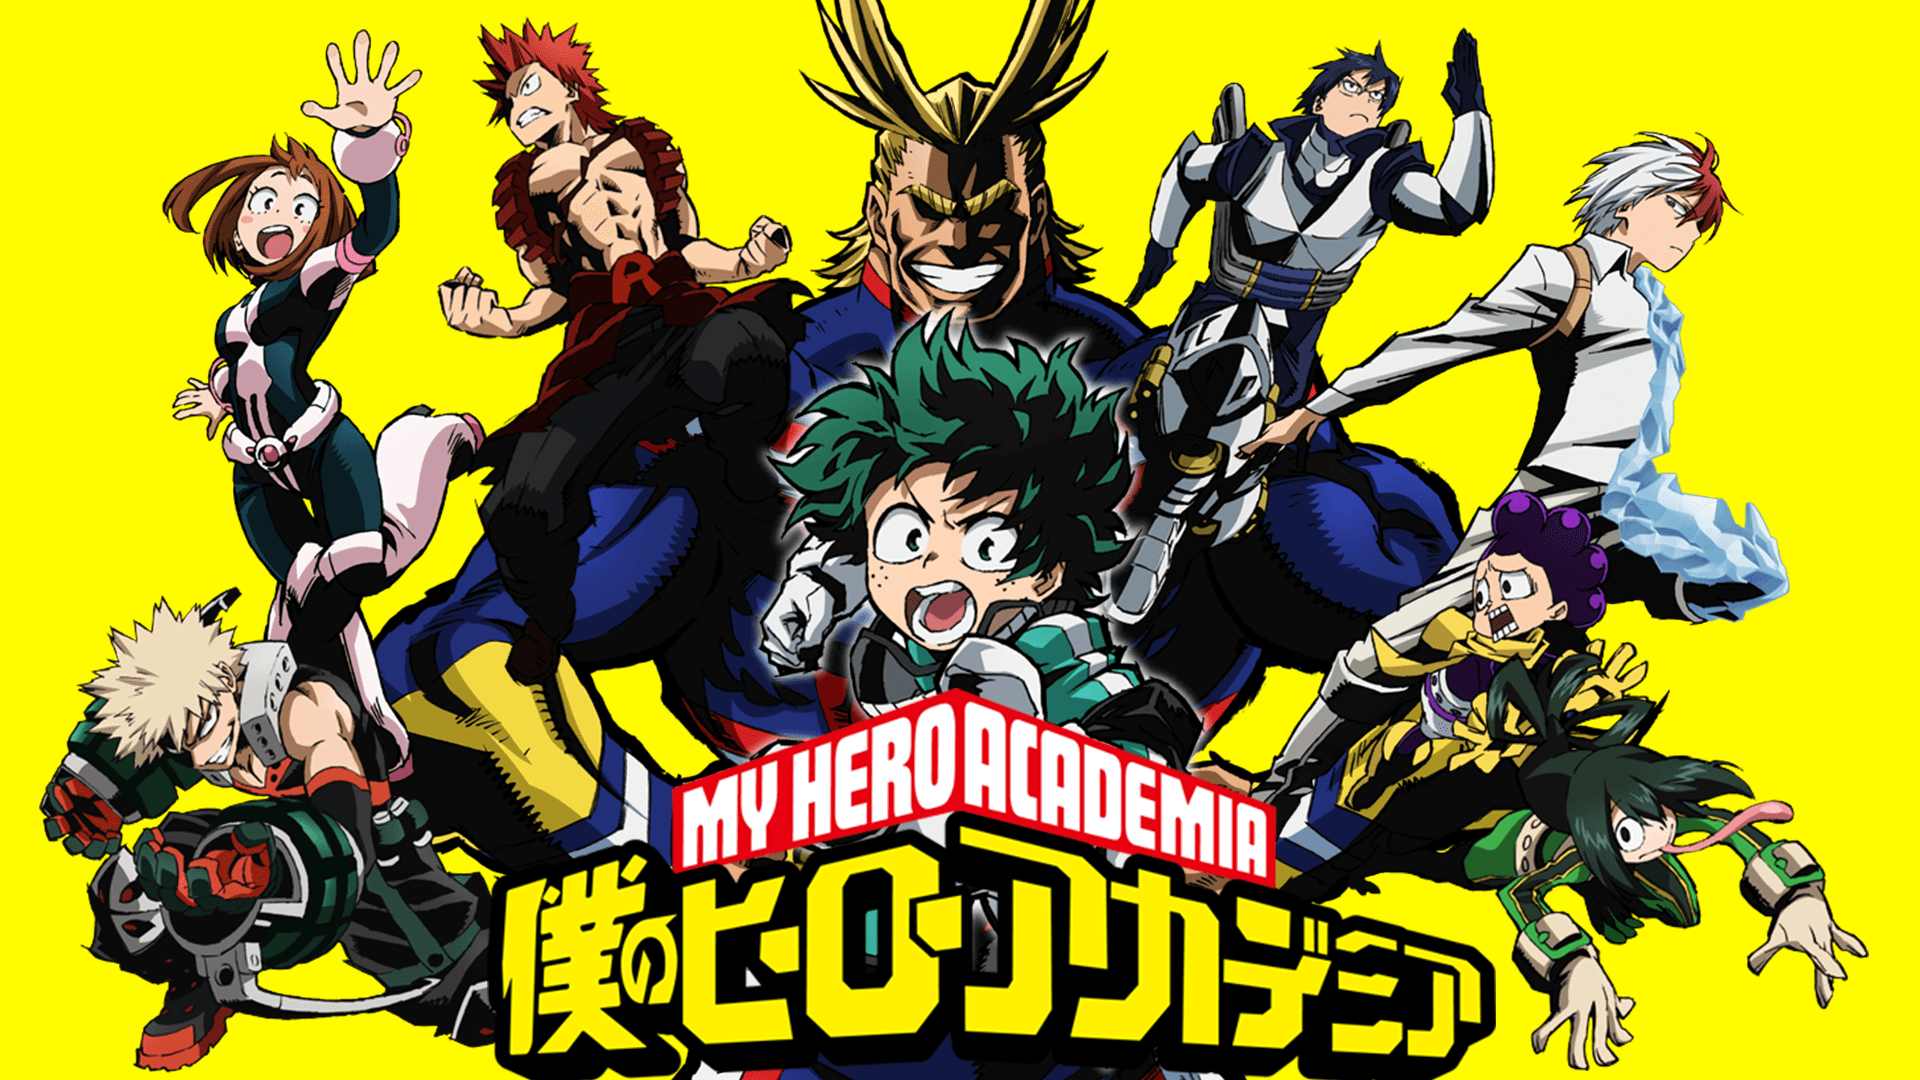 My Hero Academia My Hero Academia saison 3 prévue pour le printemps 2018 !